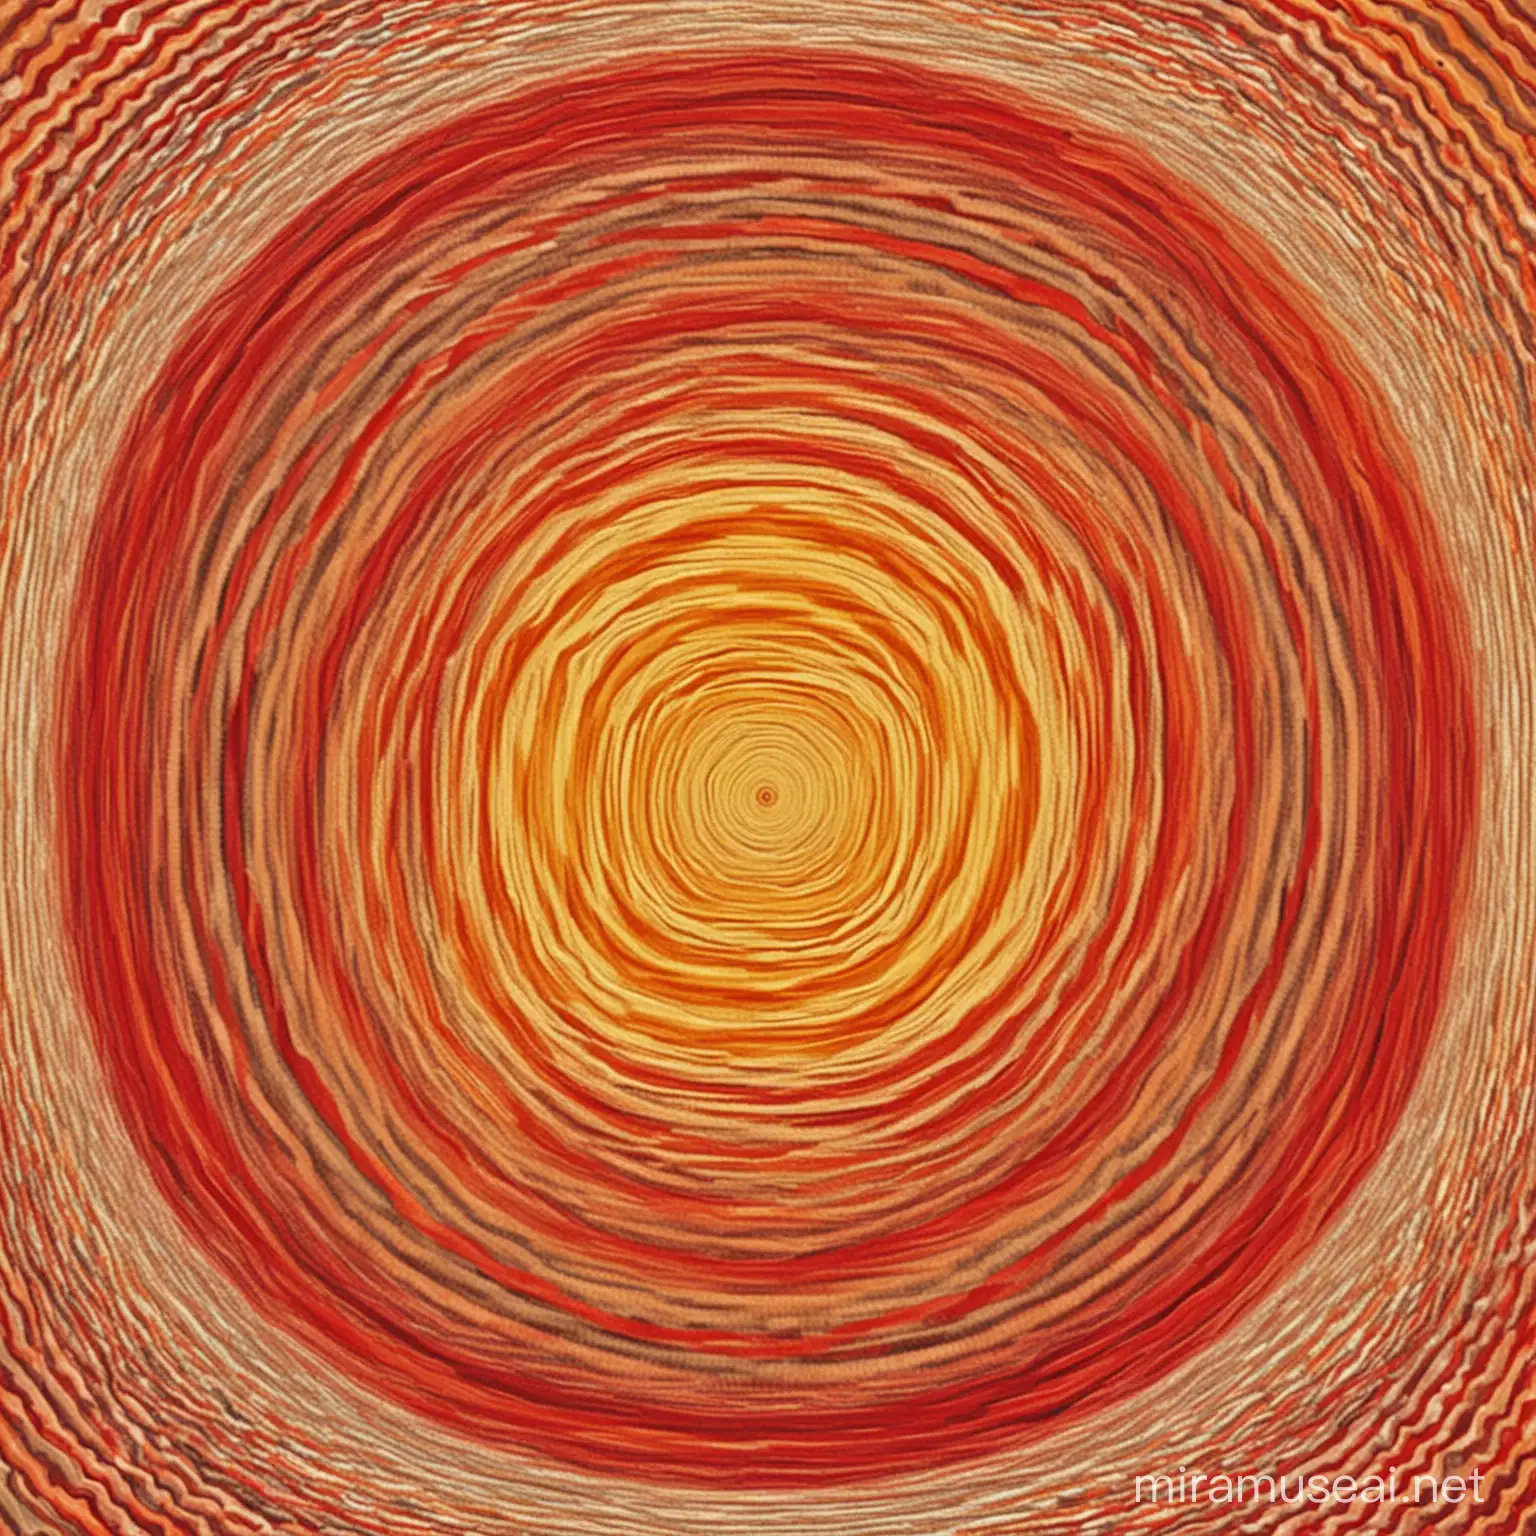 Modern Geometric Art Circular Ripples in Red and Yellow Tones